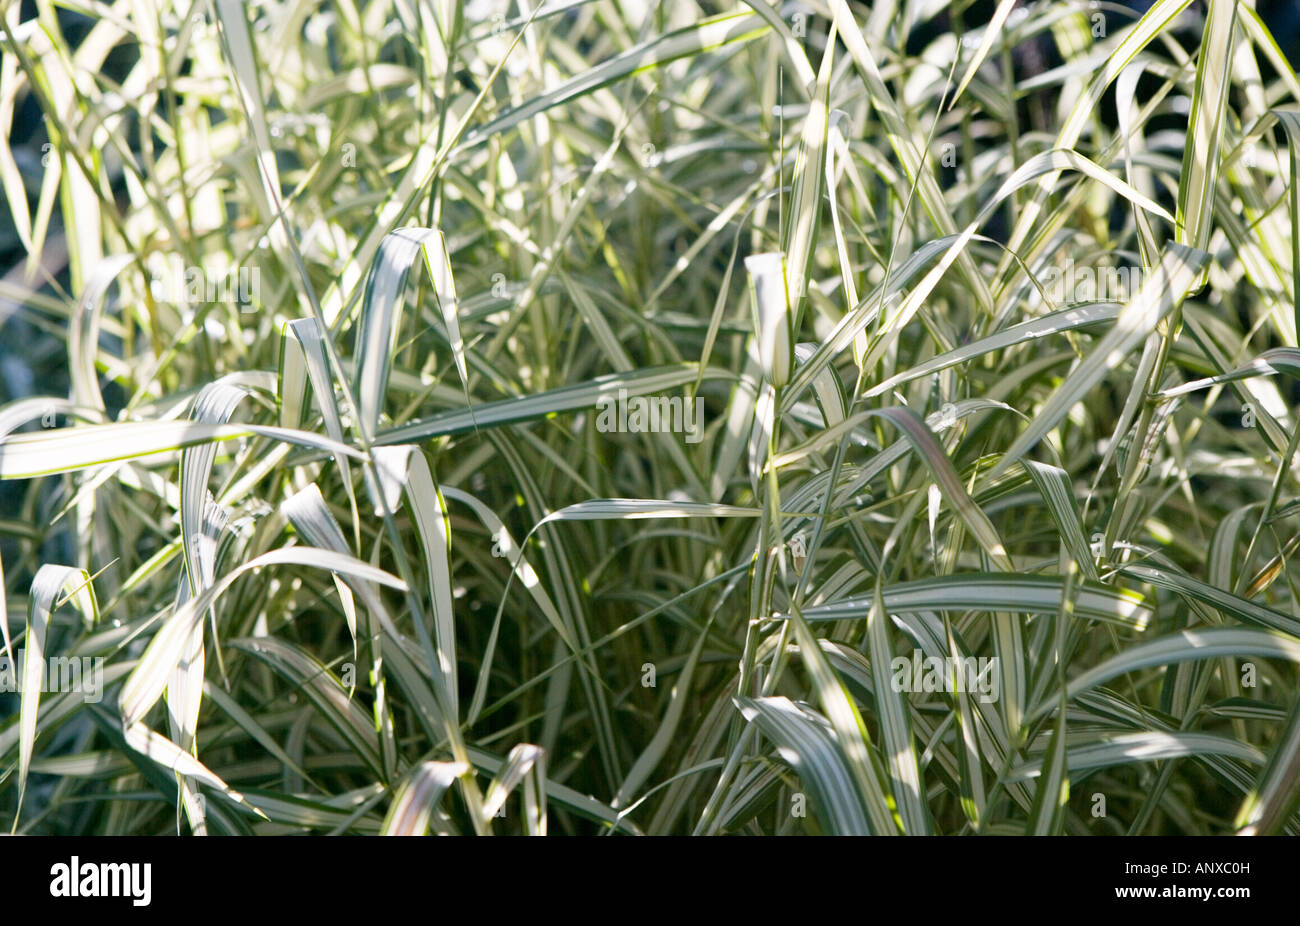 Varigated grasses Stock Photo